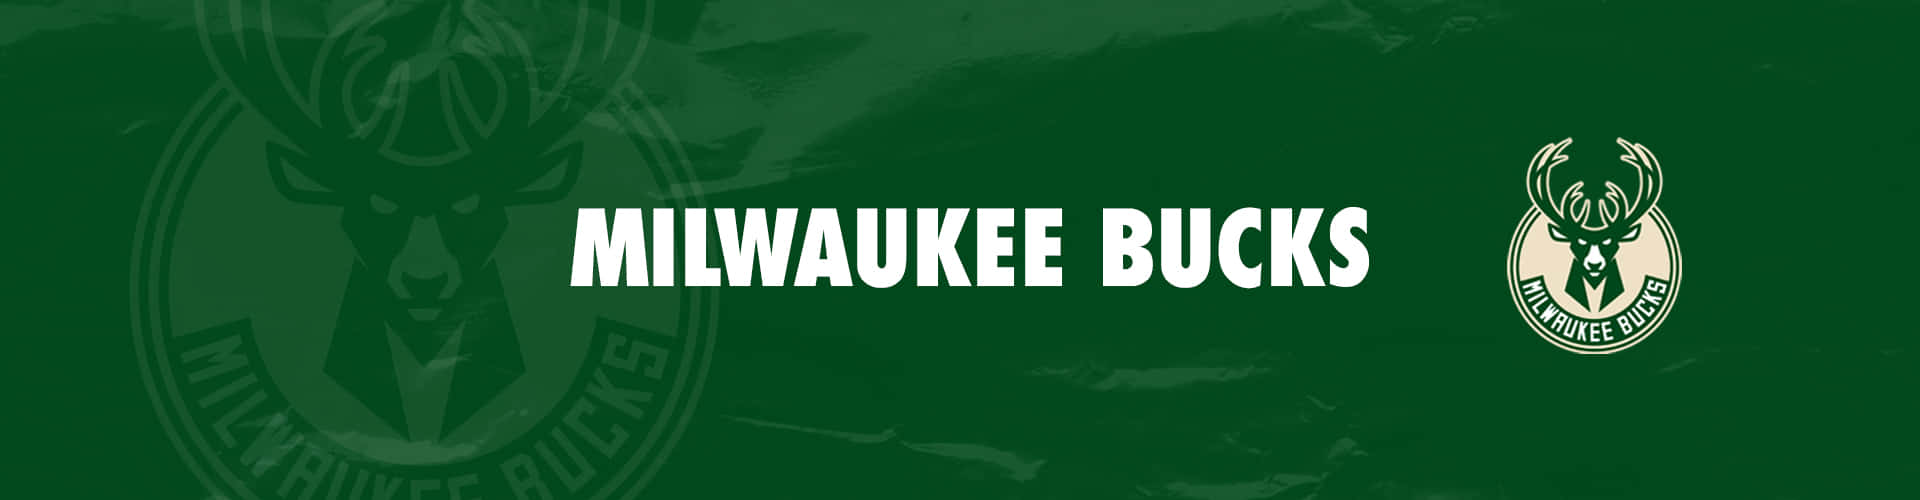 Det ikoniske logo af Milwaukee Bucks Basketball Team. Wallpaper